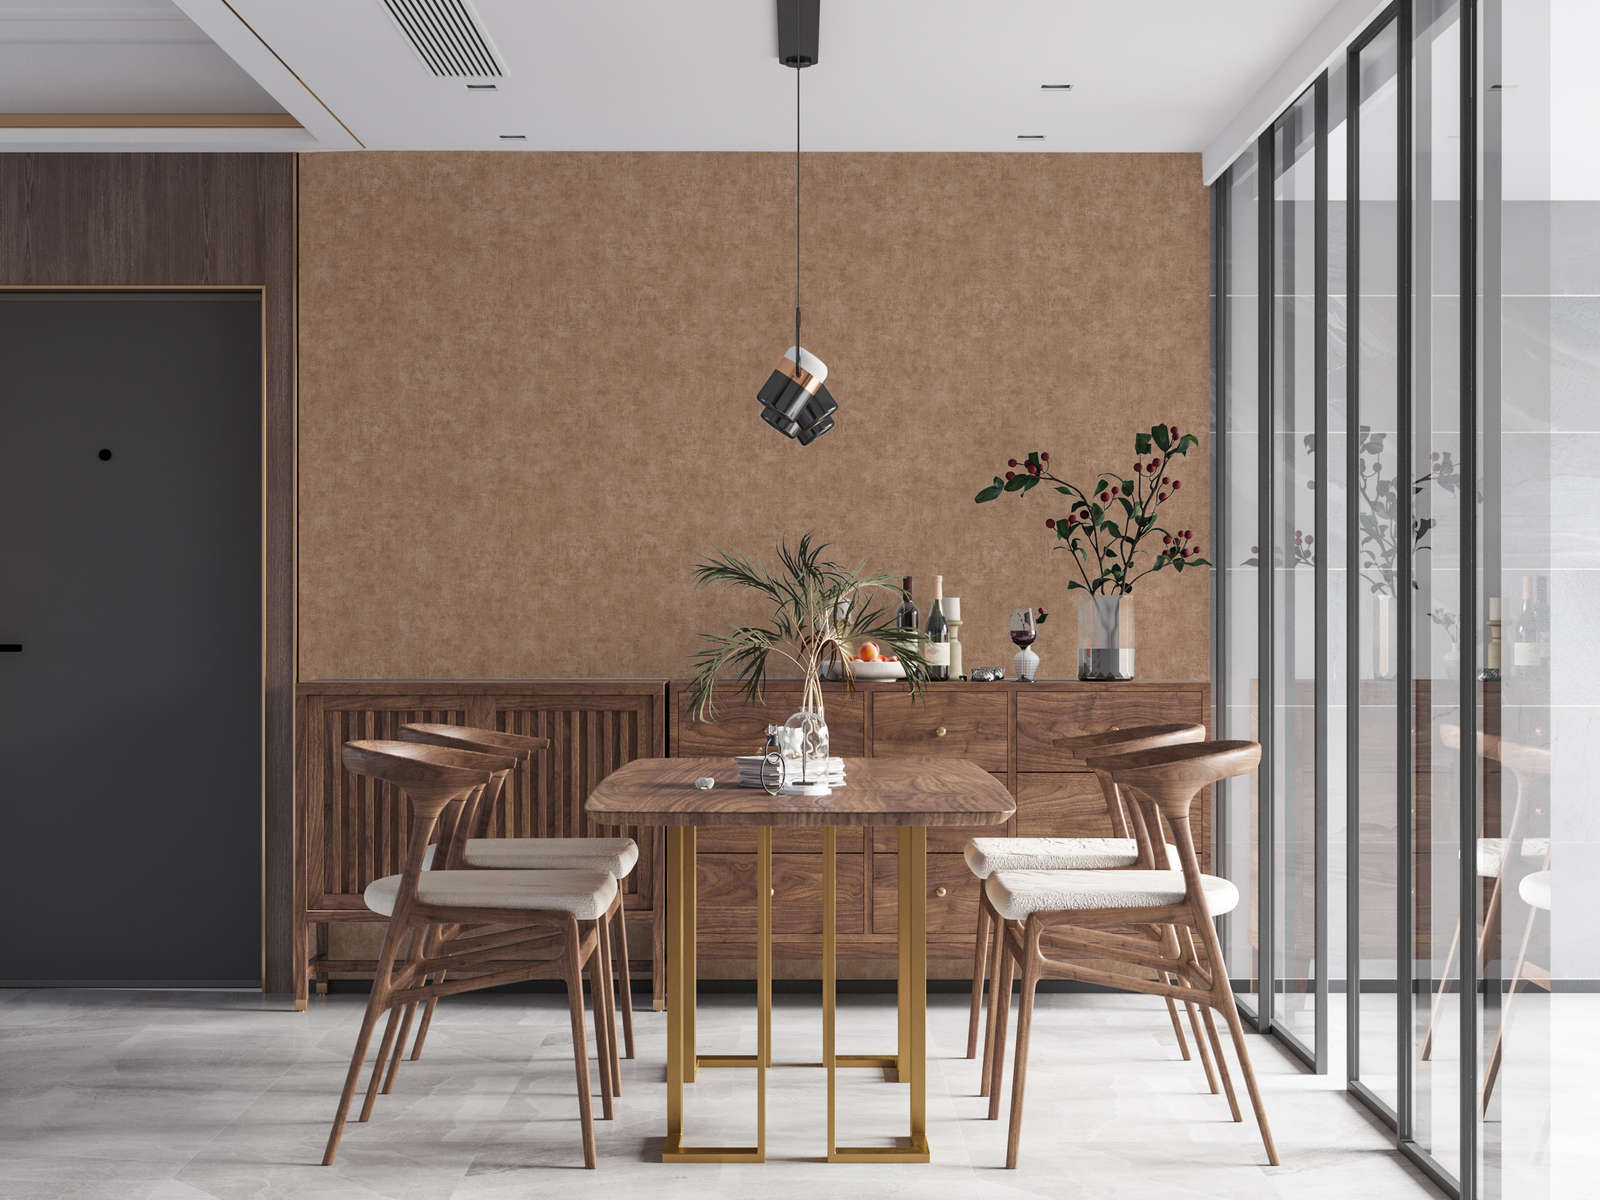             Non-woven wallpaper with textured pattern plain - beige, brown, orange
        